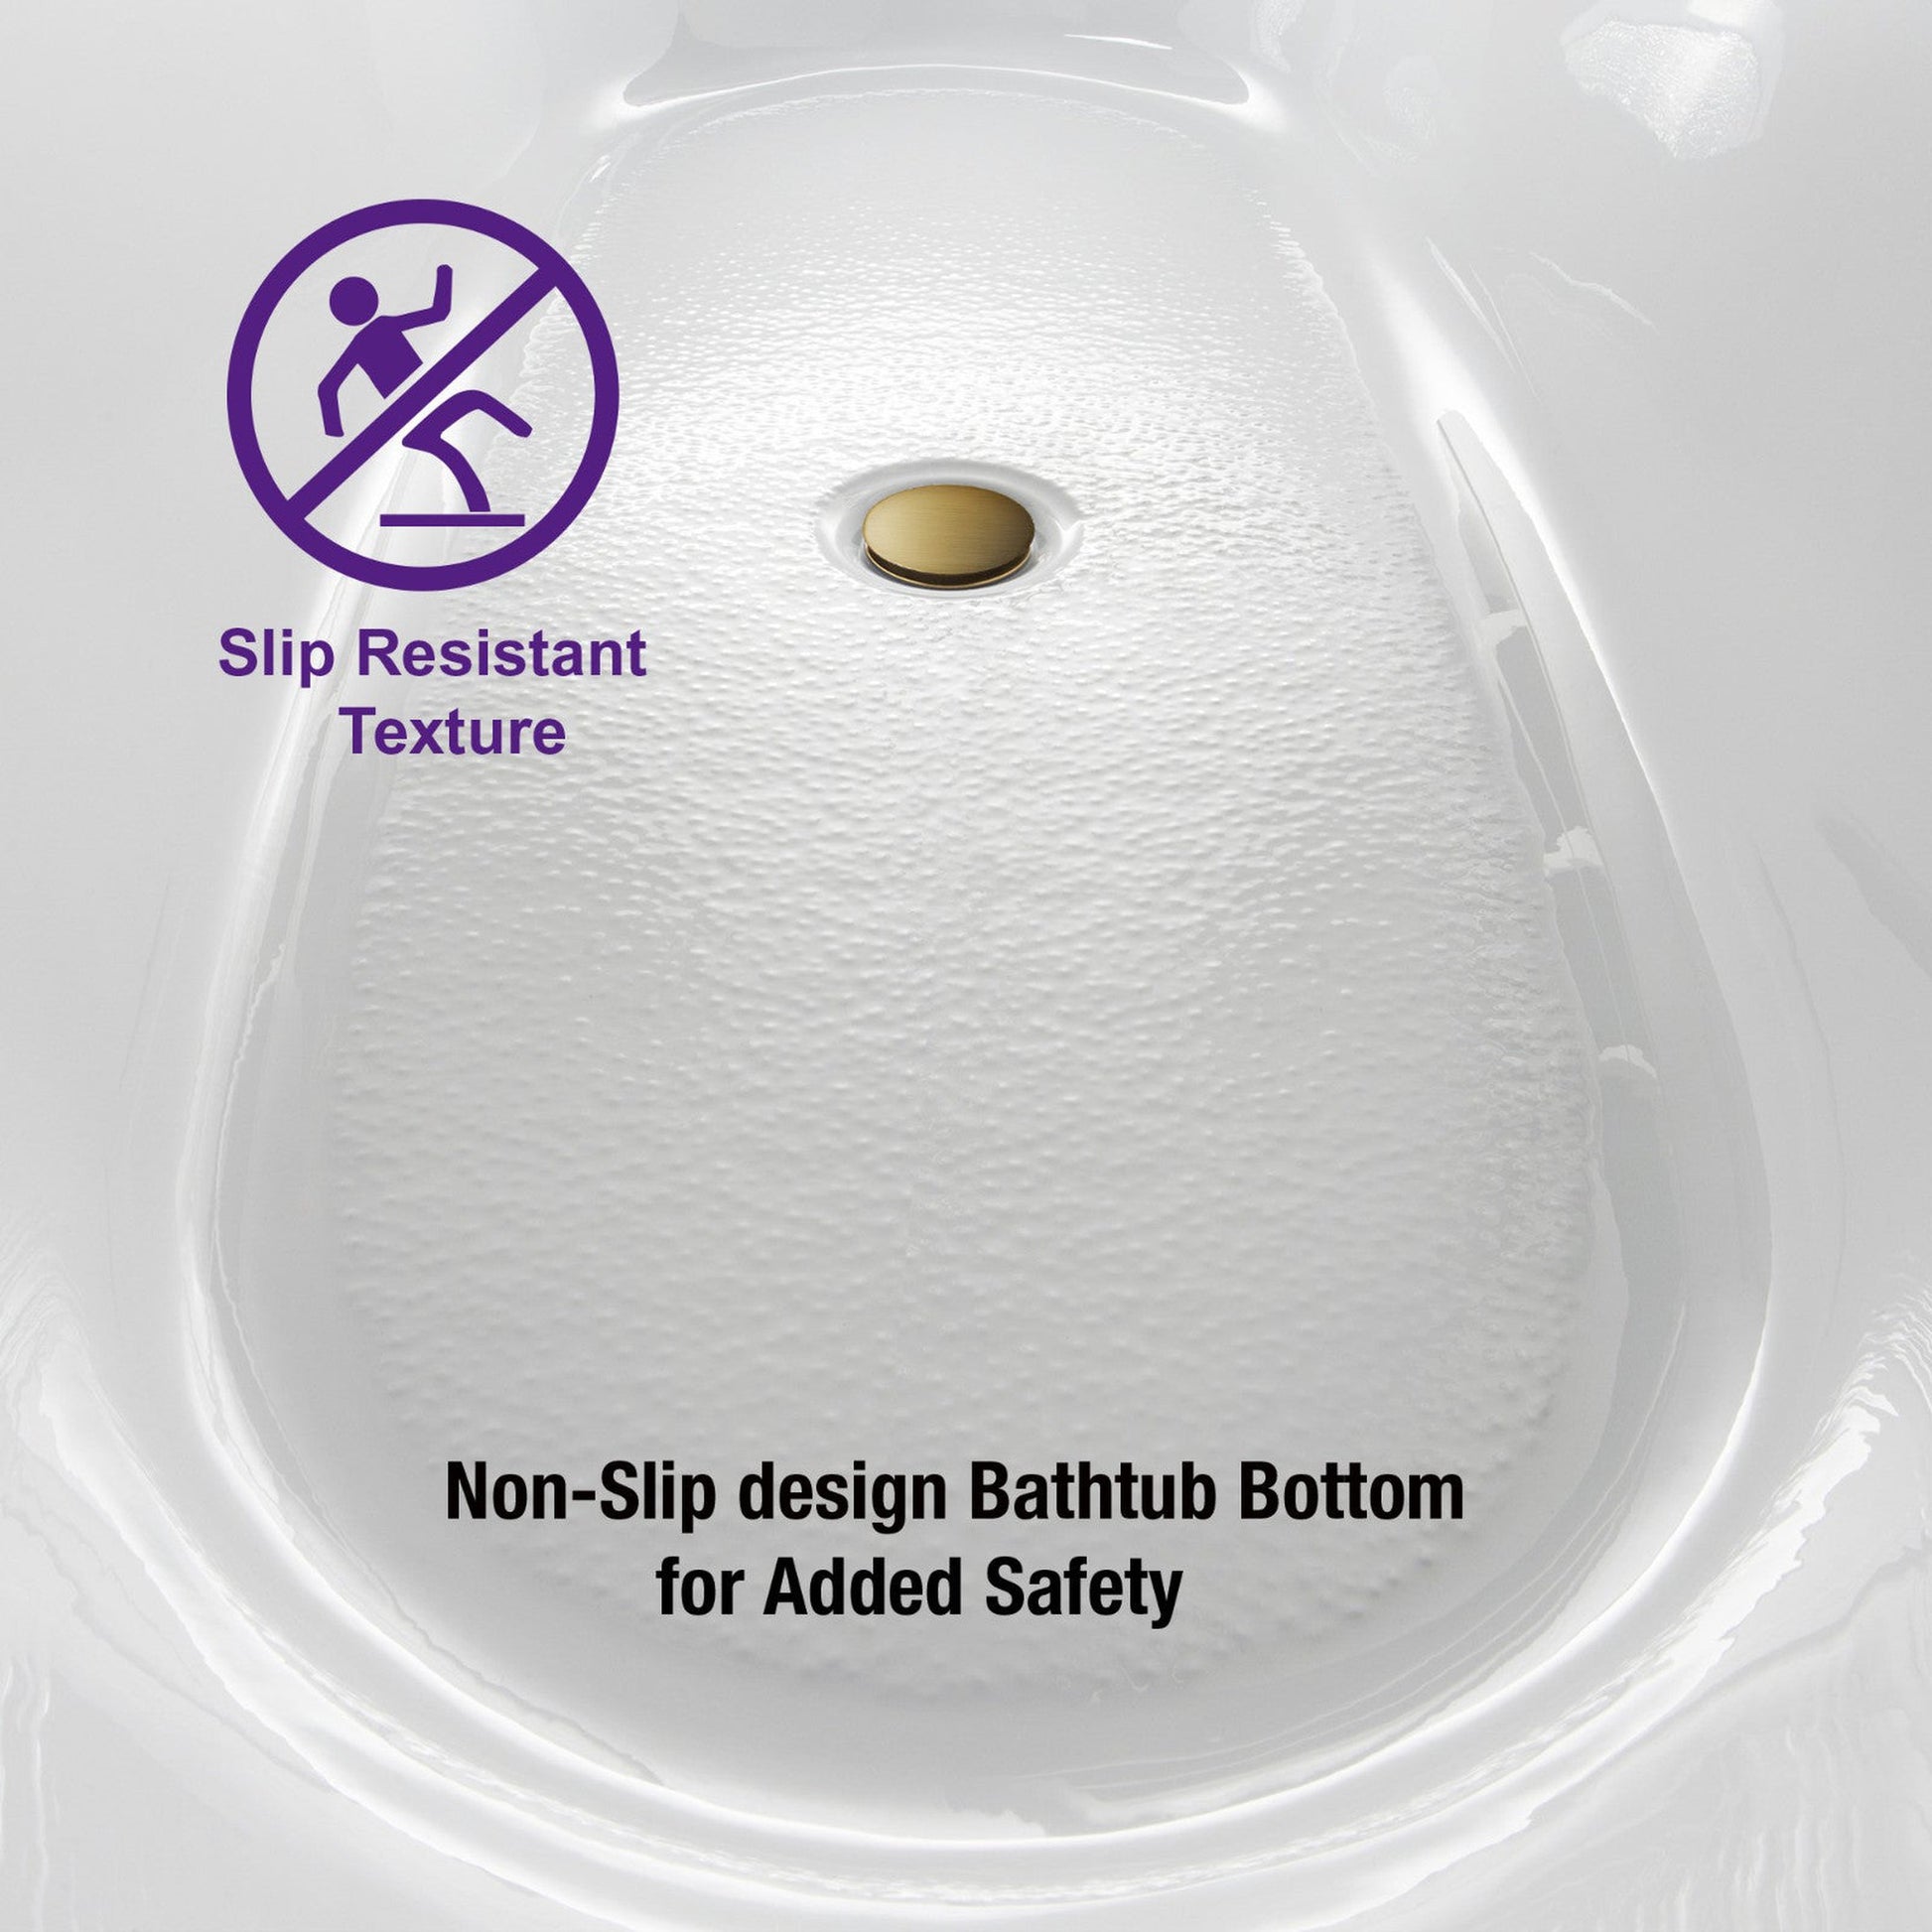 WoodBridge B0083 59" White Acrylic Freestanding Soaking Bathtub With Brushed Gold Drain and Overflow